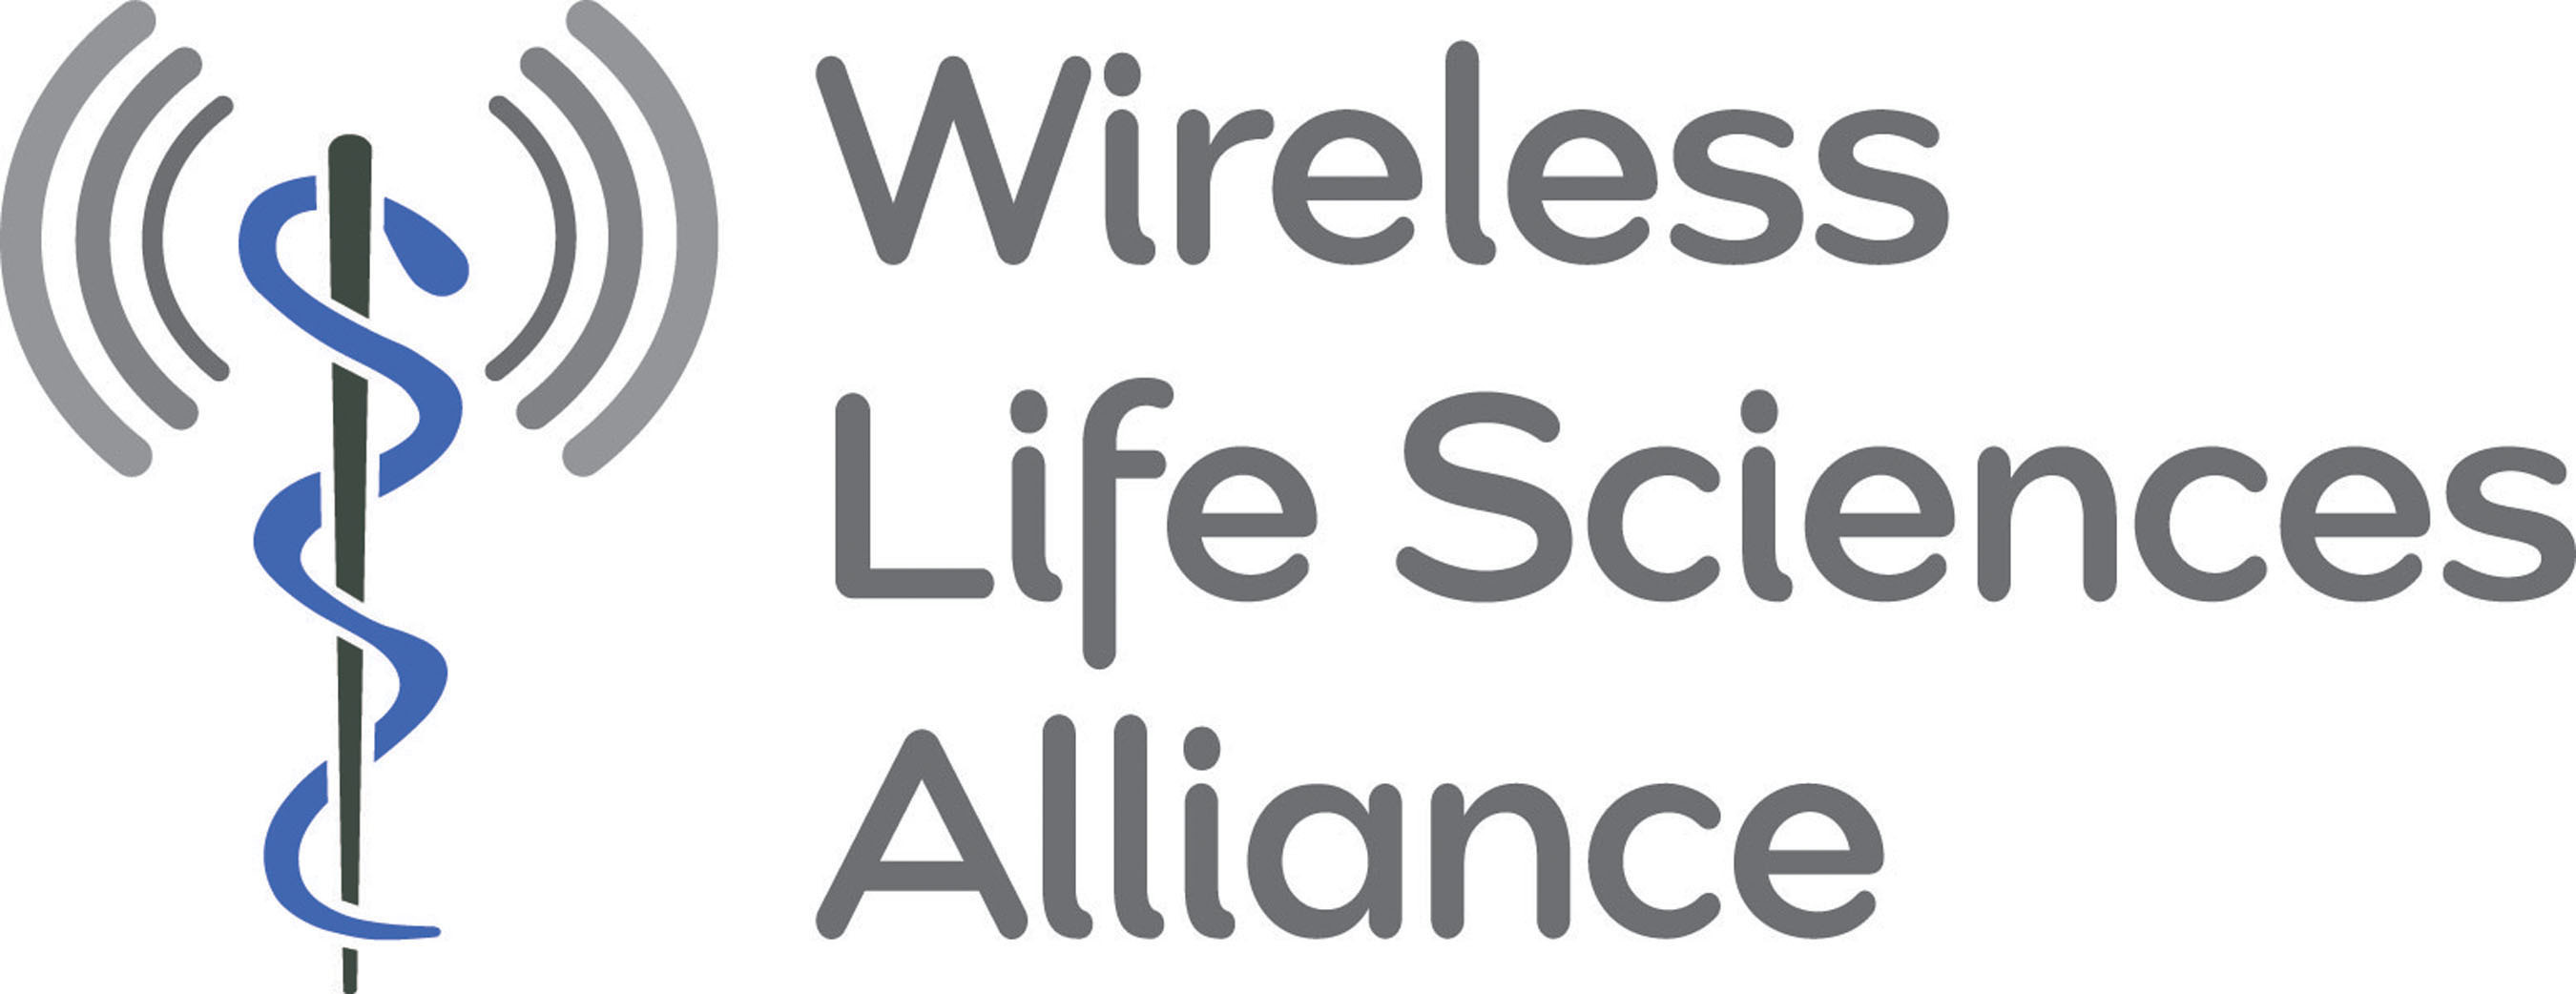 Wireless-Life Sciences Alliance Logo. (PRNewsFoto/Wireless-Life Sciences Alliance) (PRNewsFoto/)